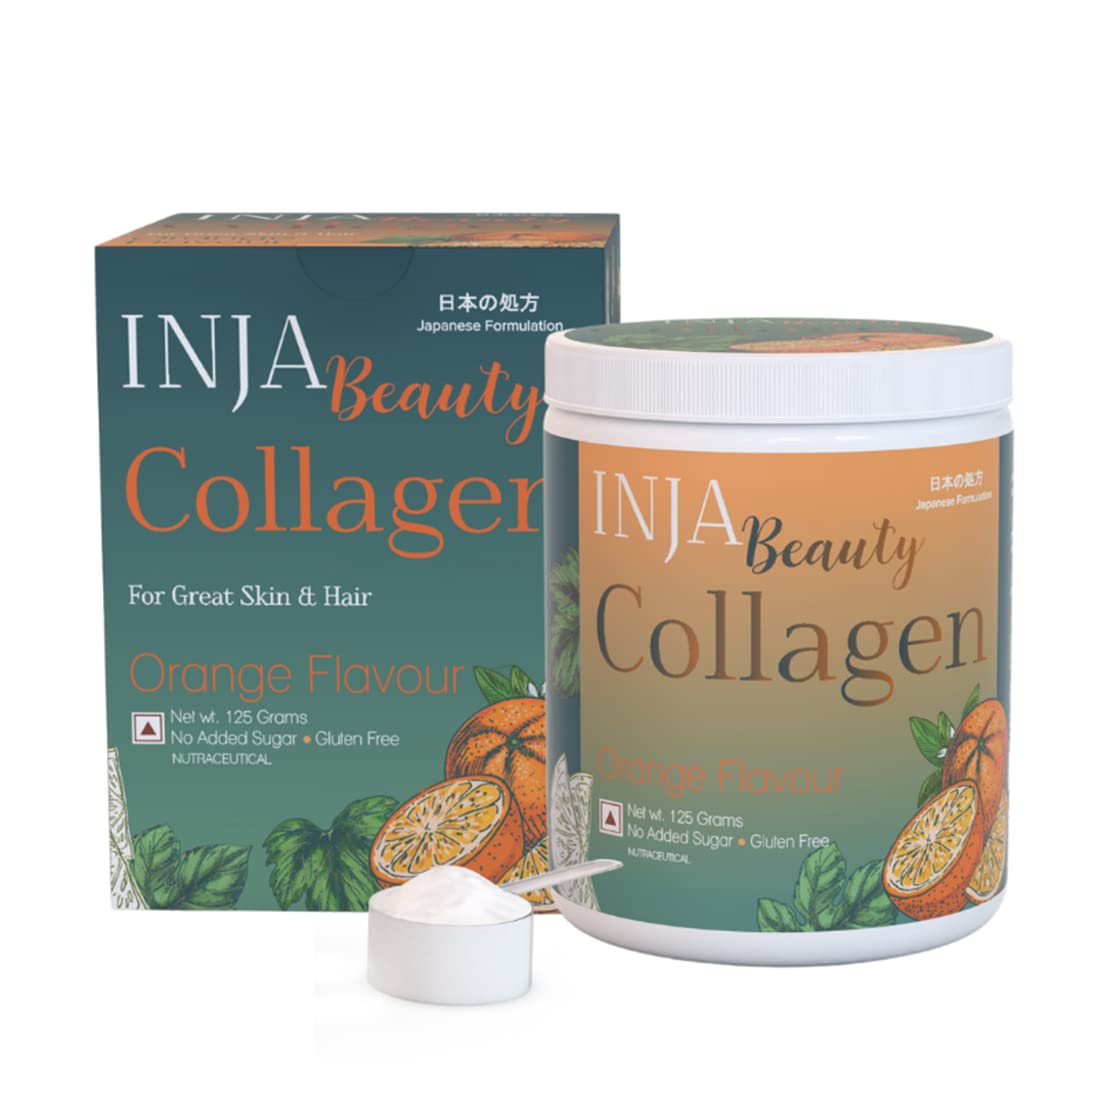 Buy INJA Beauty Collagen Orange Flavour Powder for Great Skin & Hair, 125 gm Online